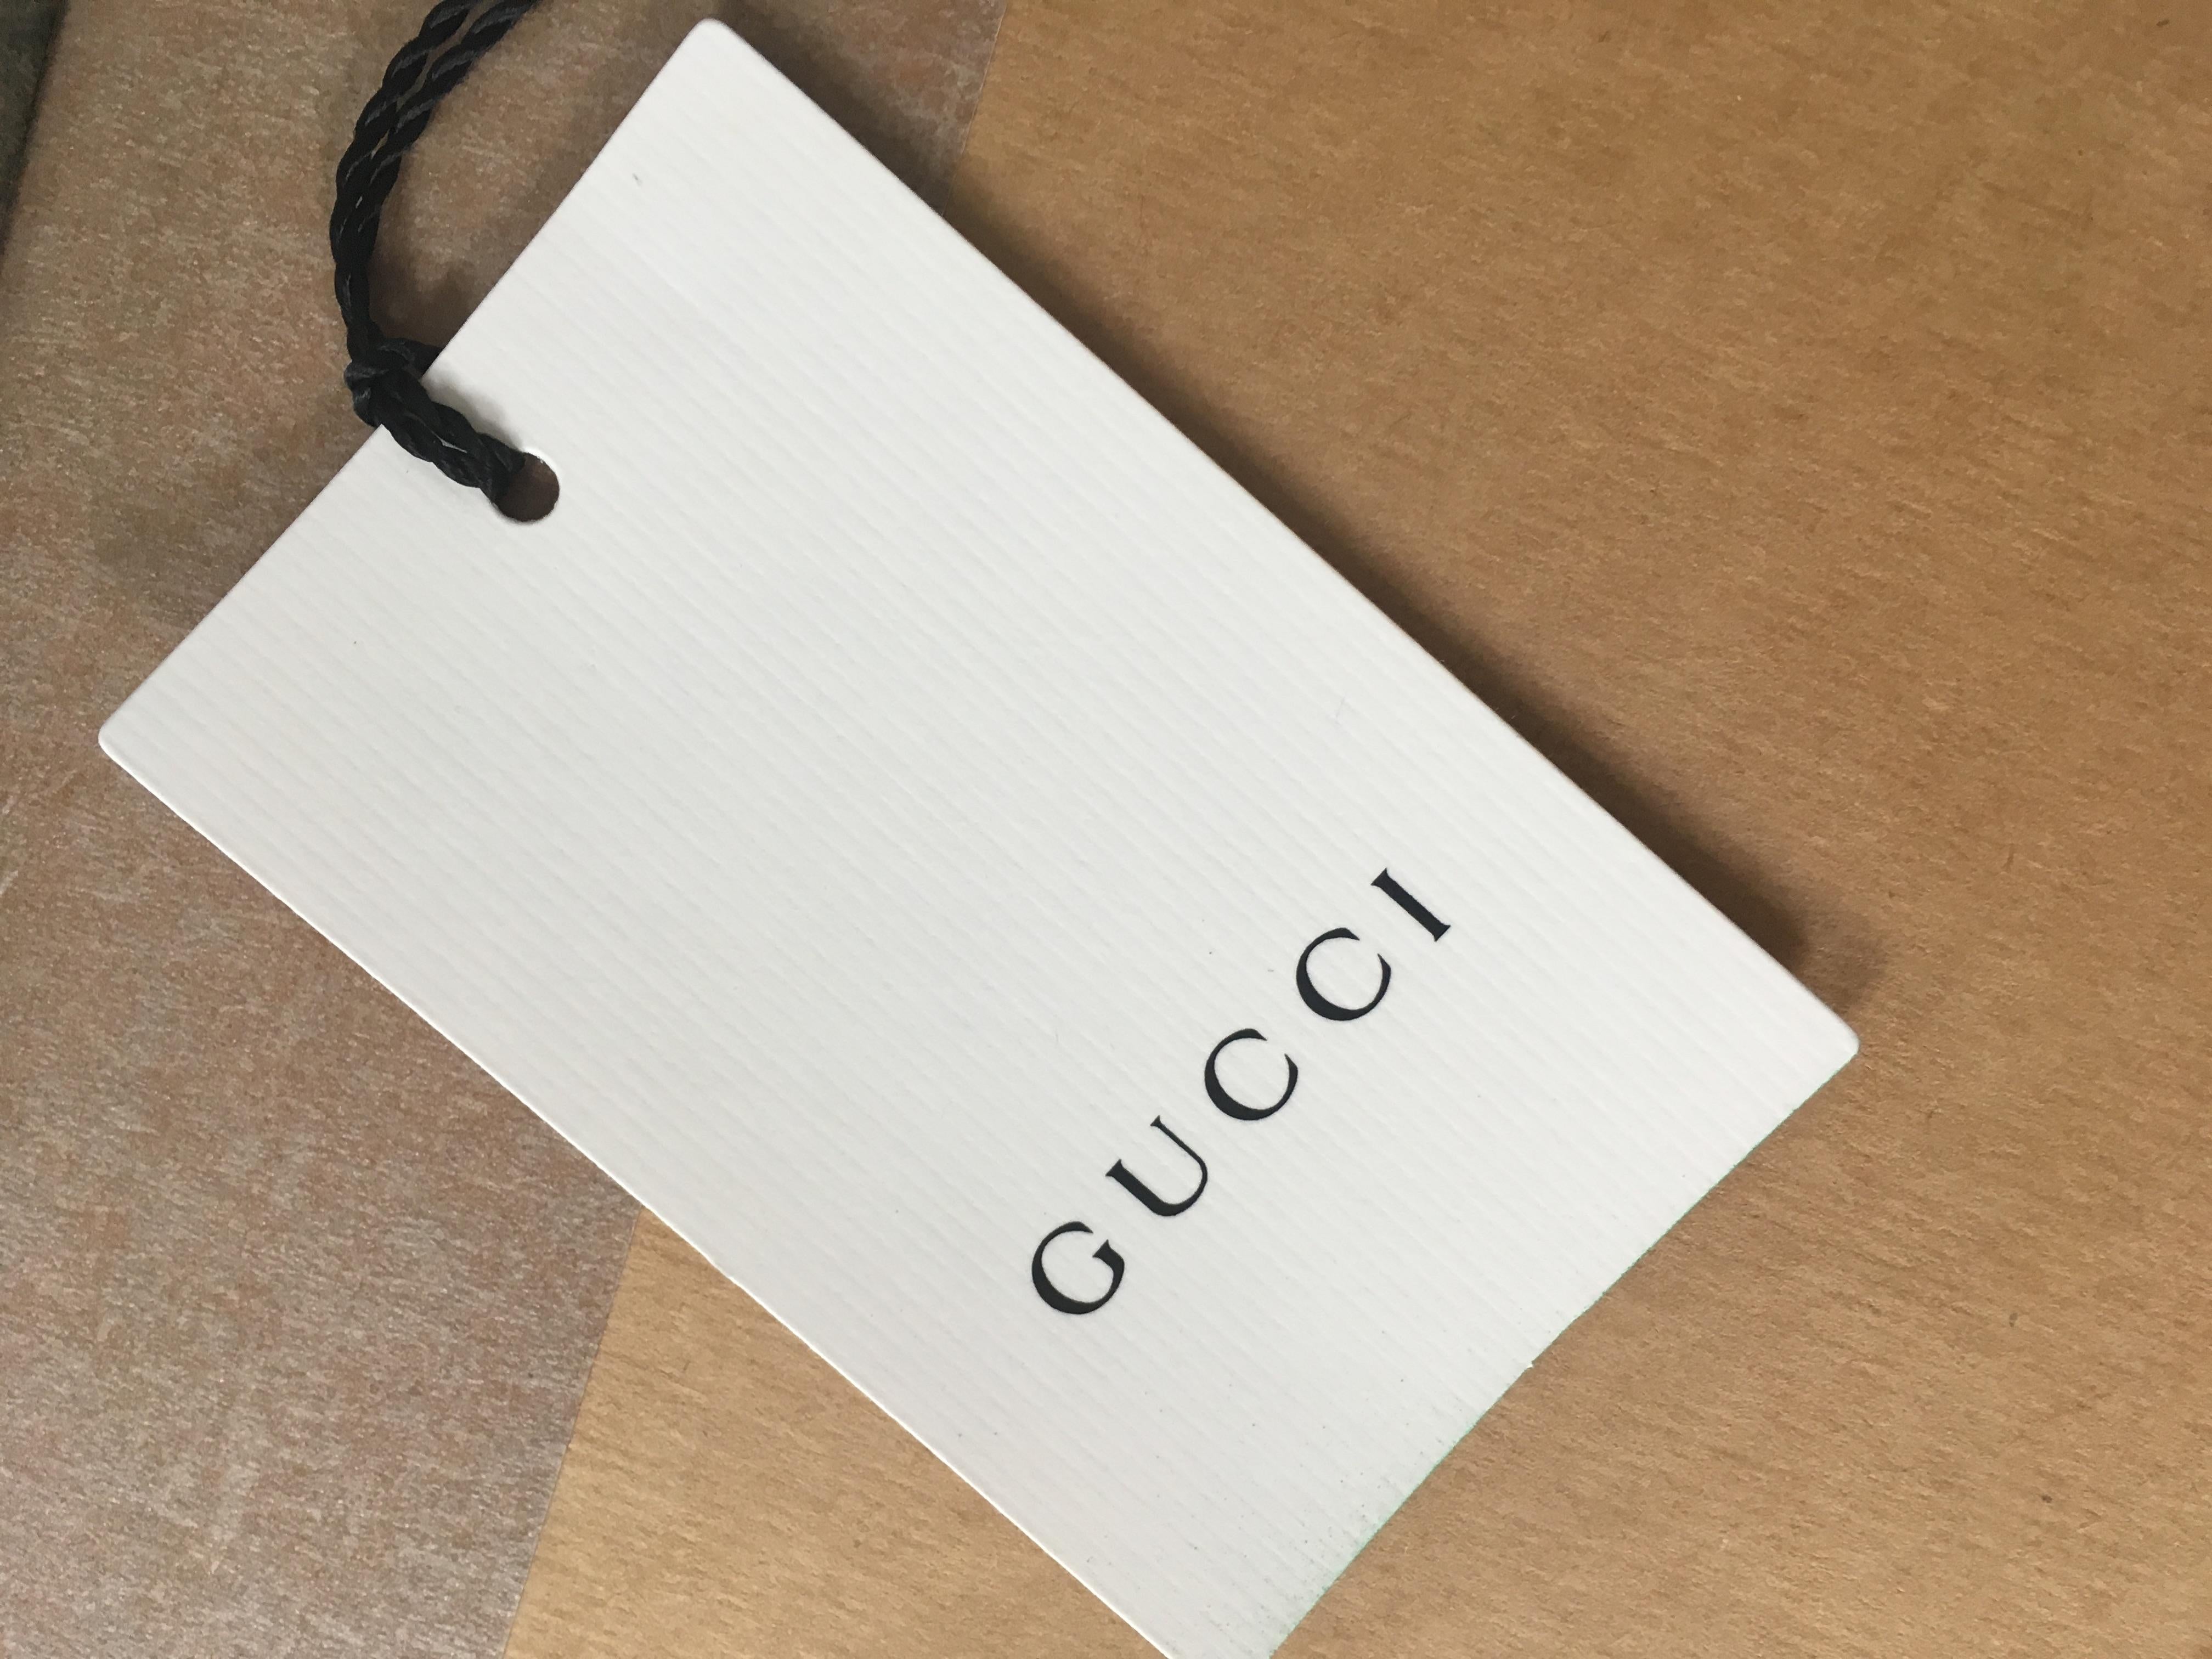 GUCCI - Life is Gucci - Logo - graffiti art - street art - gucci logo - abstract 4